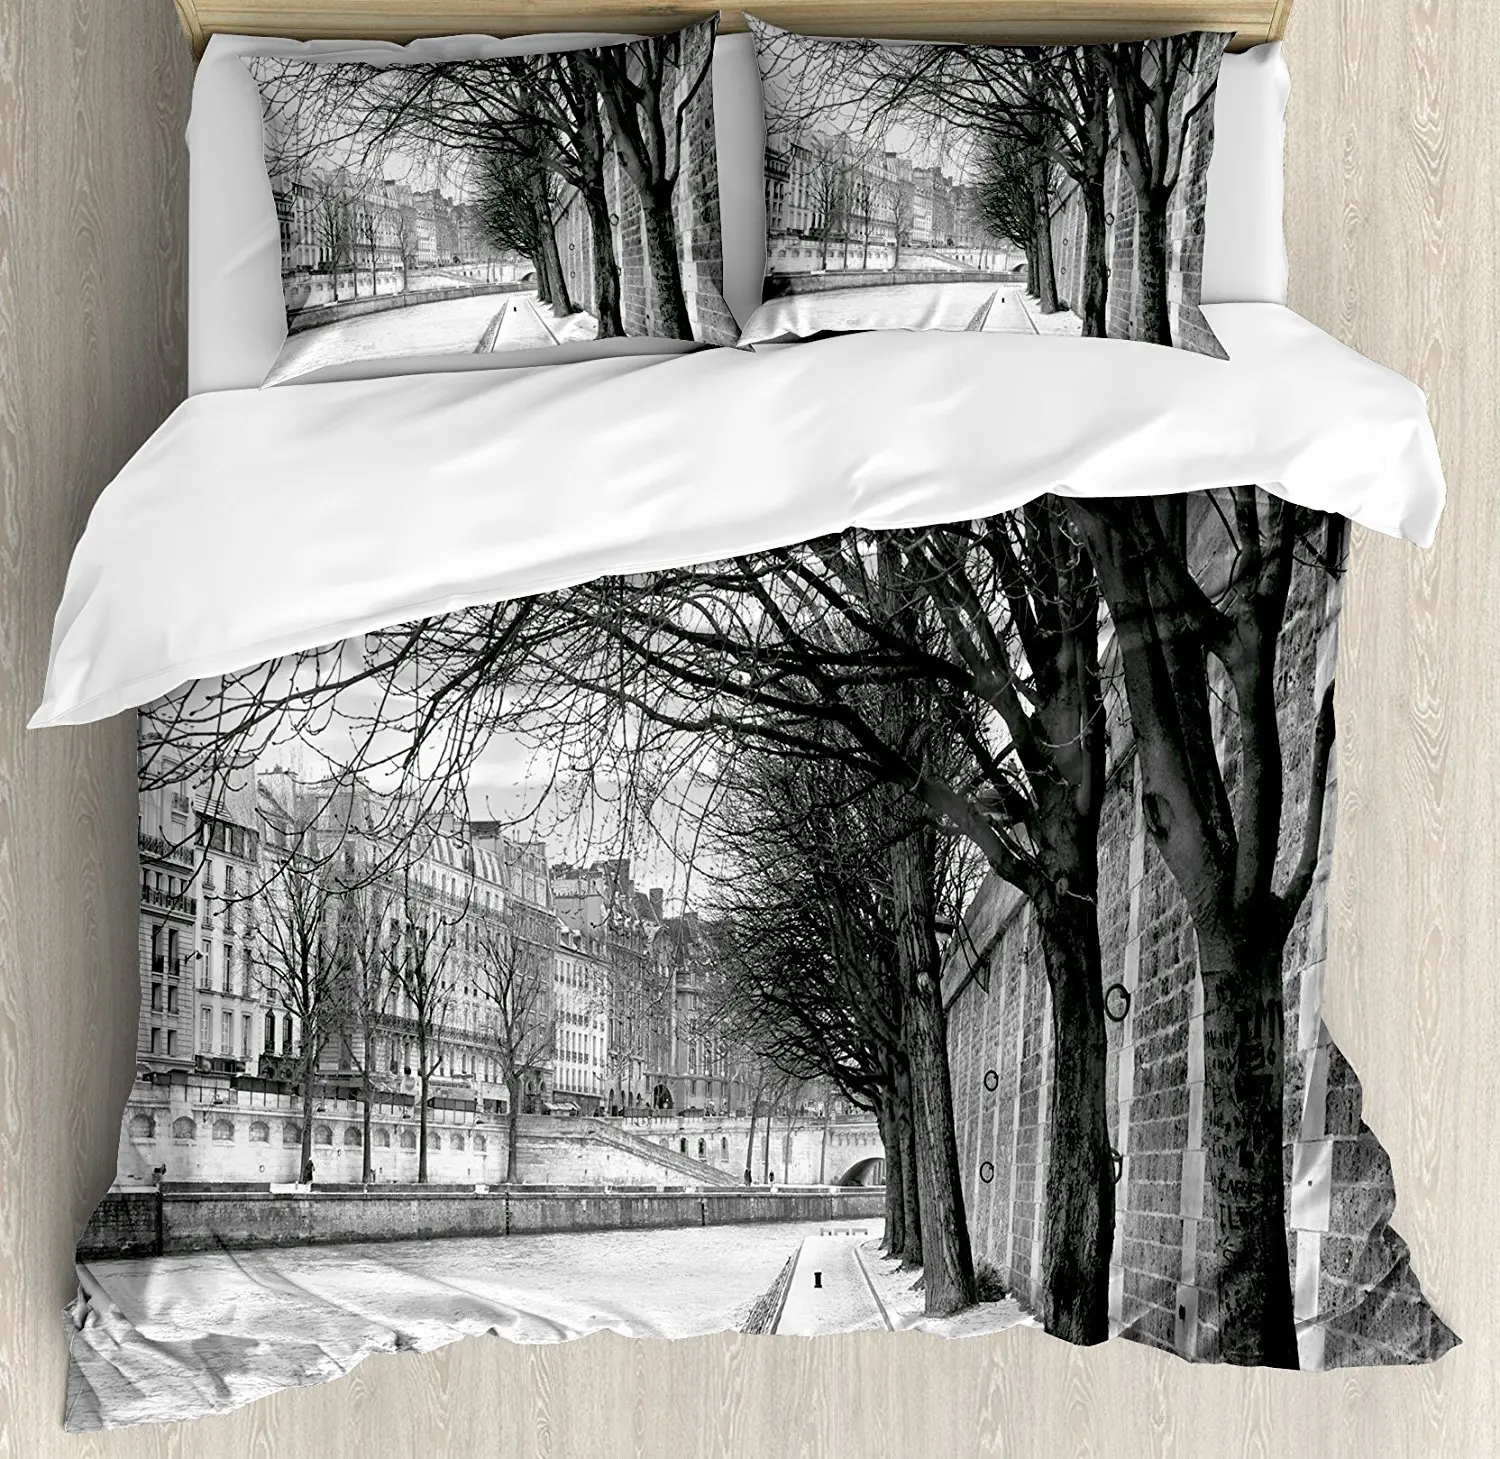 

Black and White Decorations Duvet Cover Set Seine River Paris France Snowy Winter in Urban City Trees 4 Piece Bedding Set